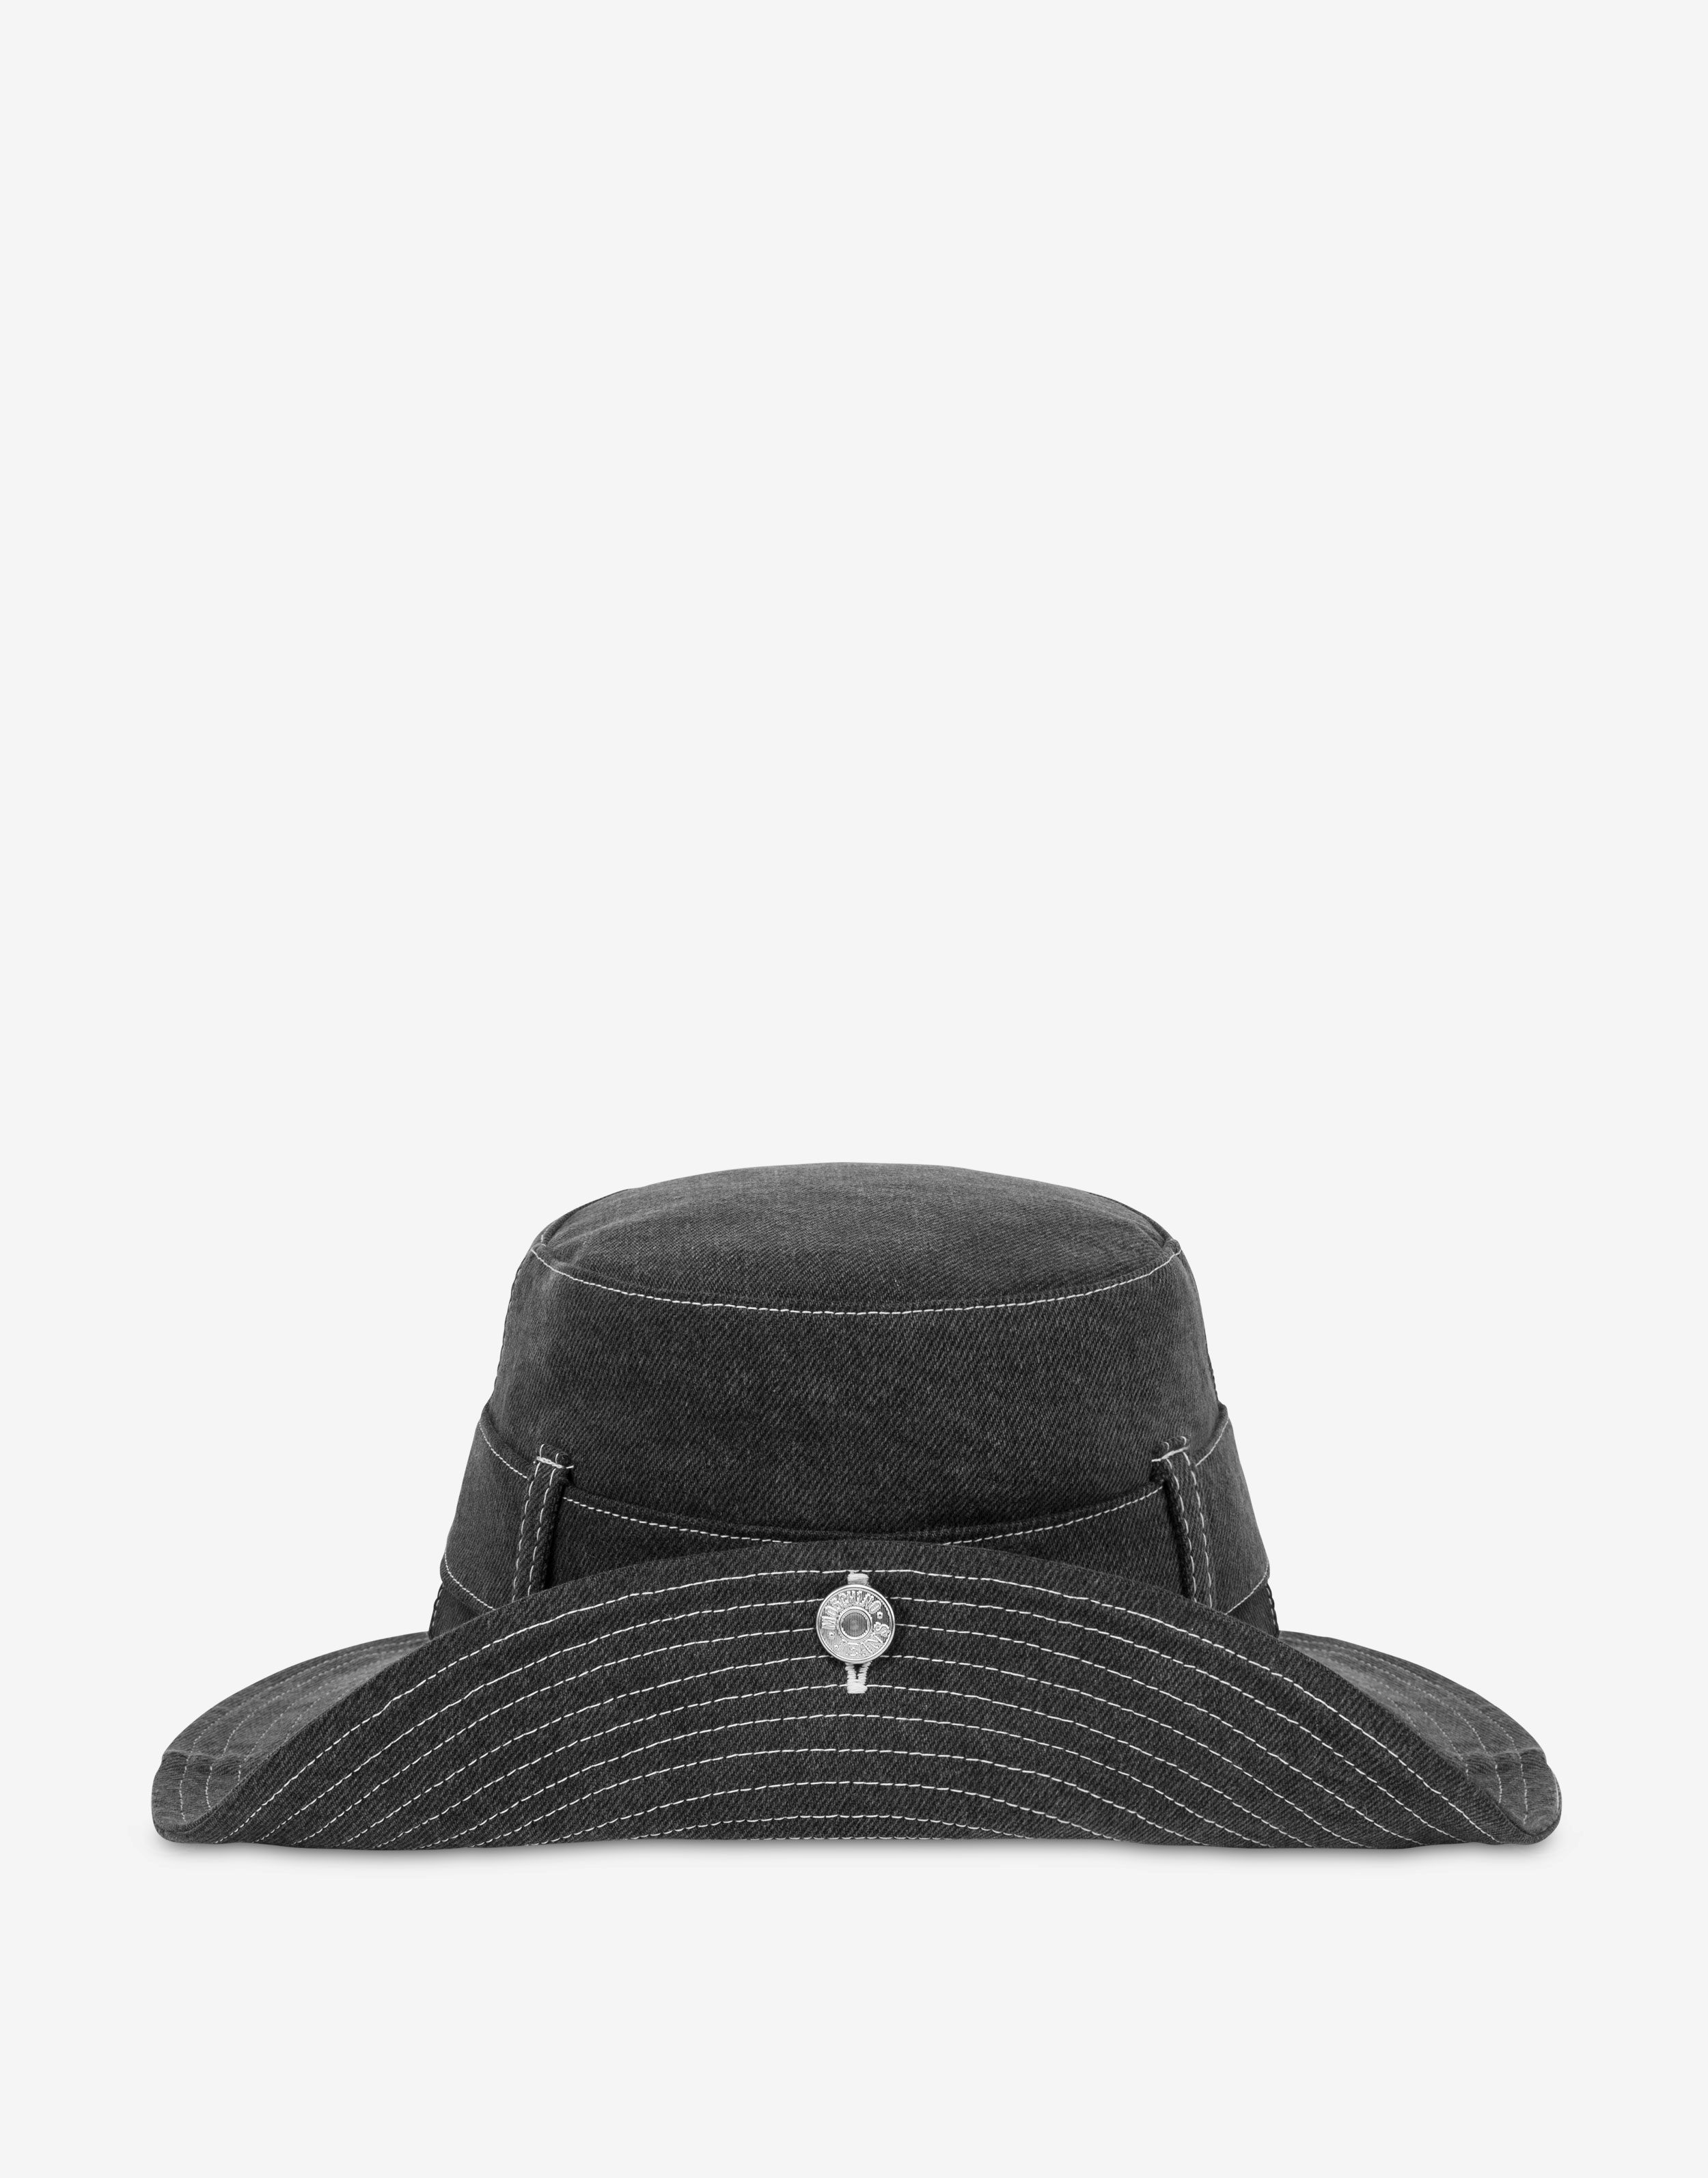 Recycled black denim hat